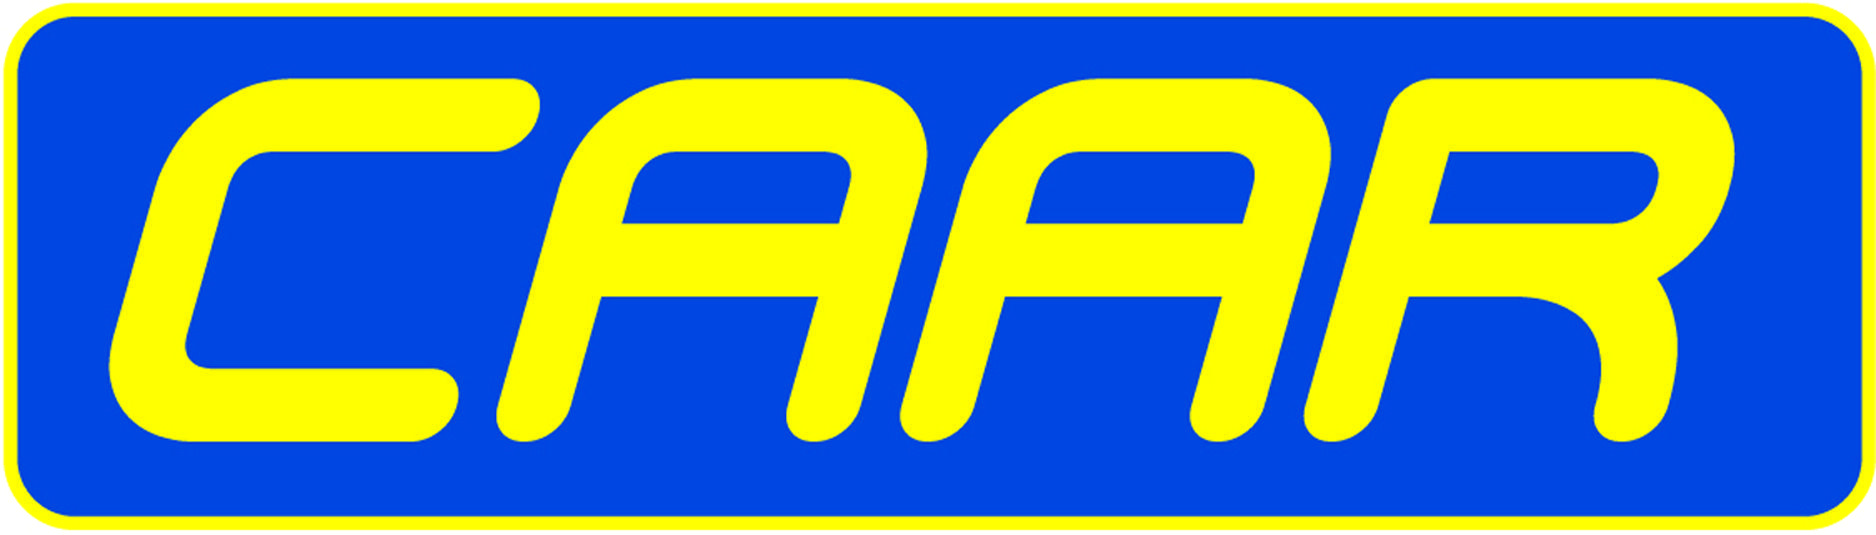 Caar Logo - ALCO Filters | Alco Filters (UK) Ltd signs up to supply CAAR Members